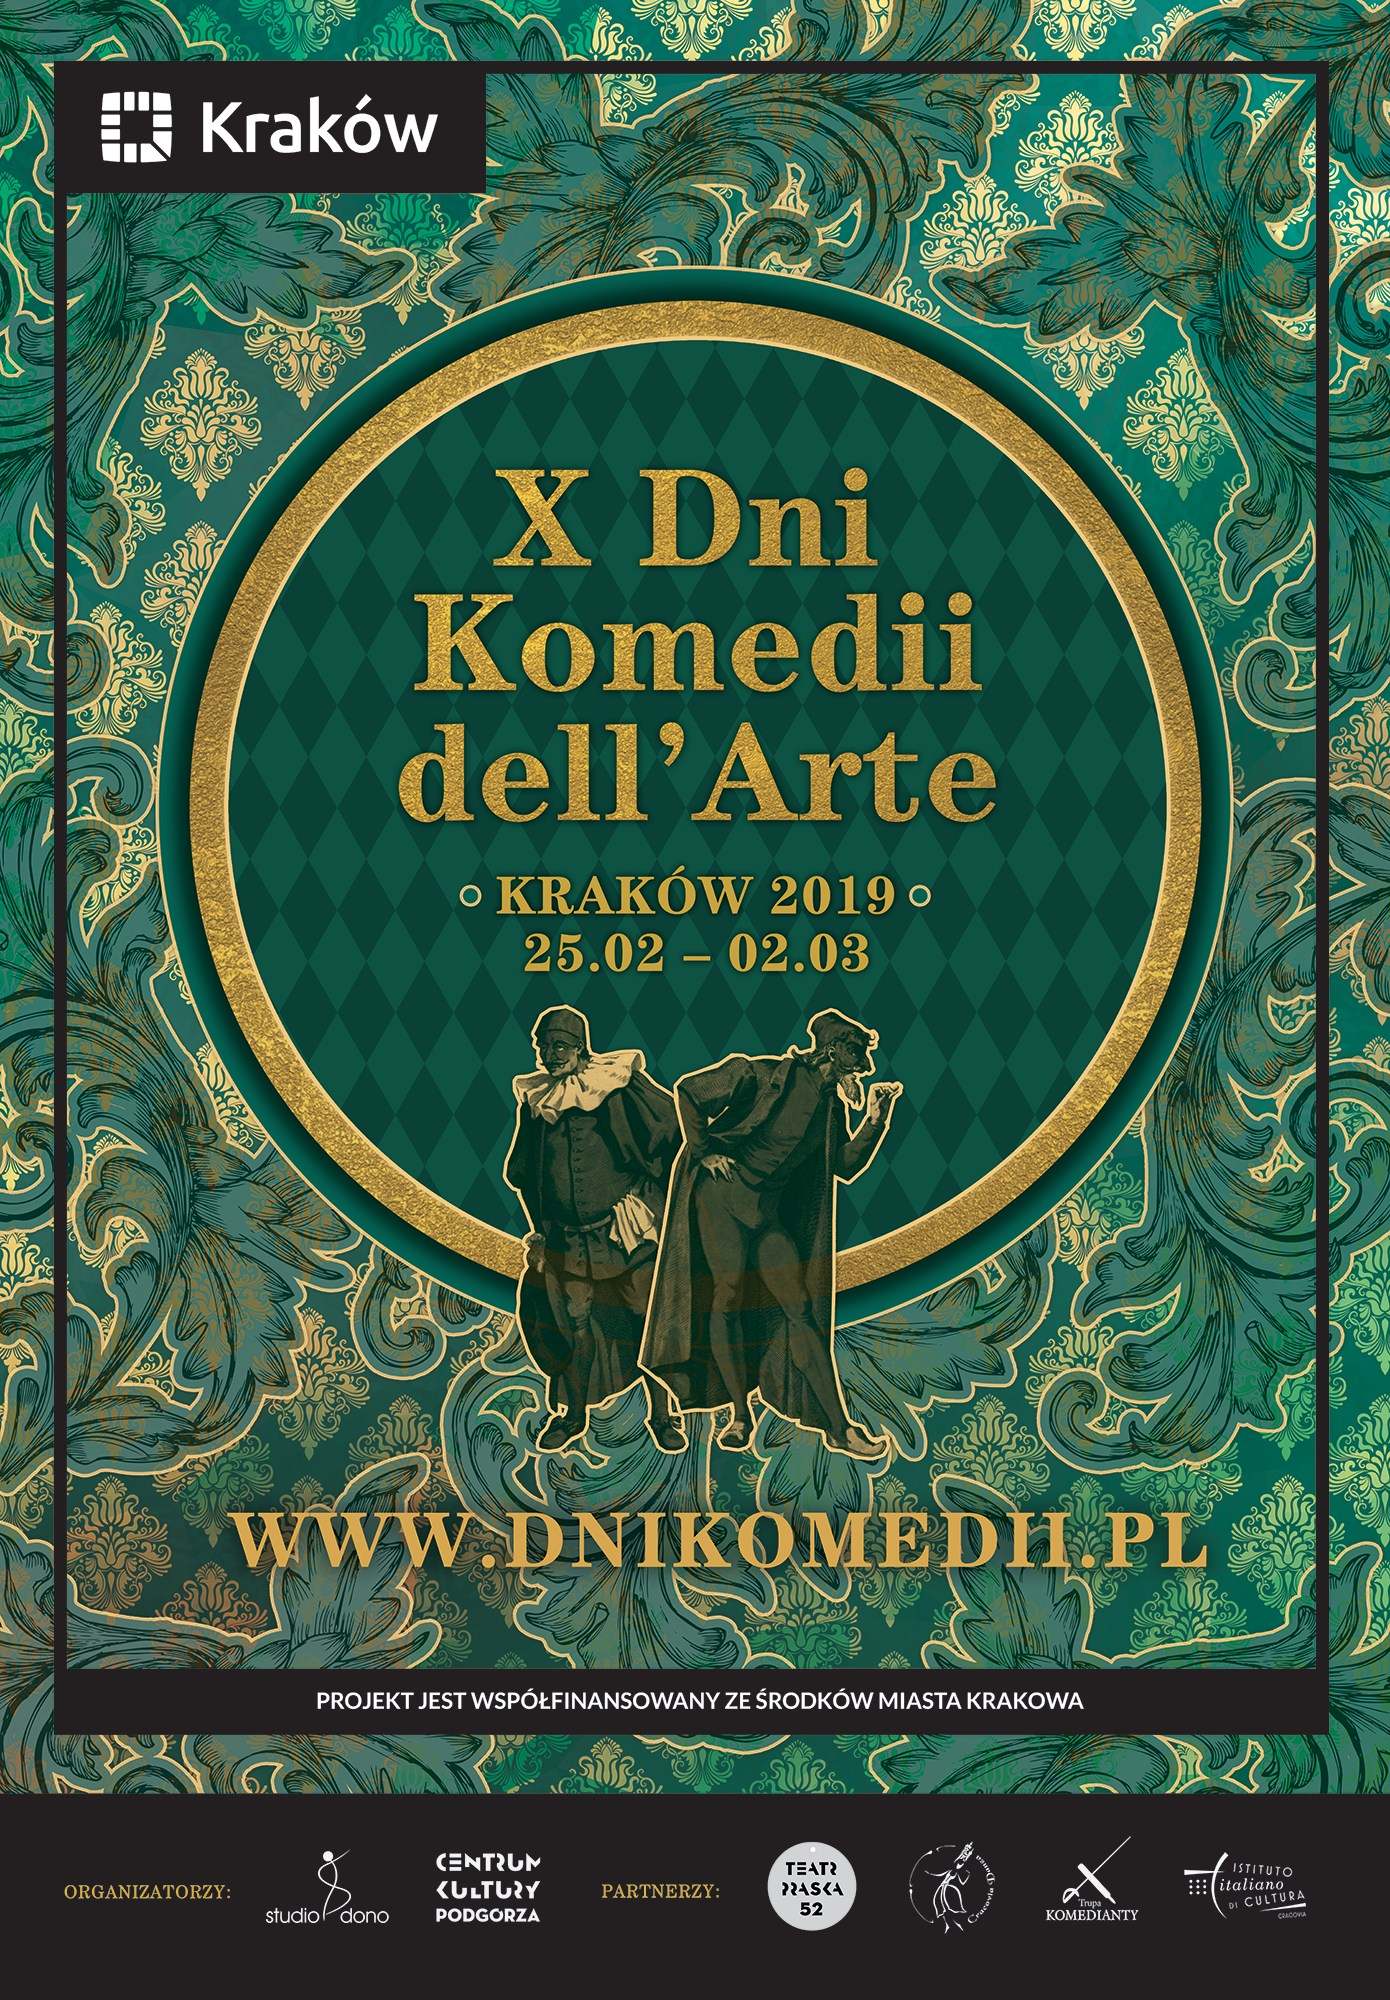 X Dni Komedii dell'Arte Kraków 2019